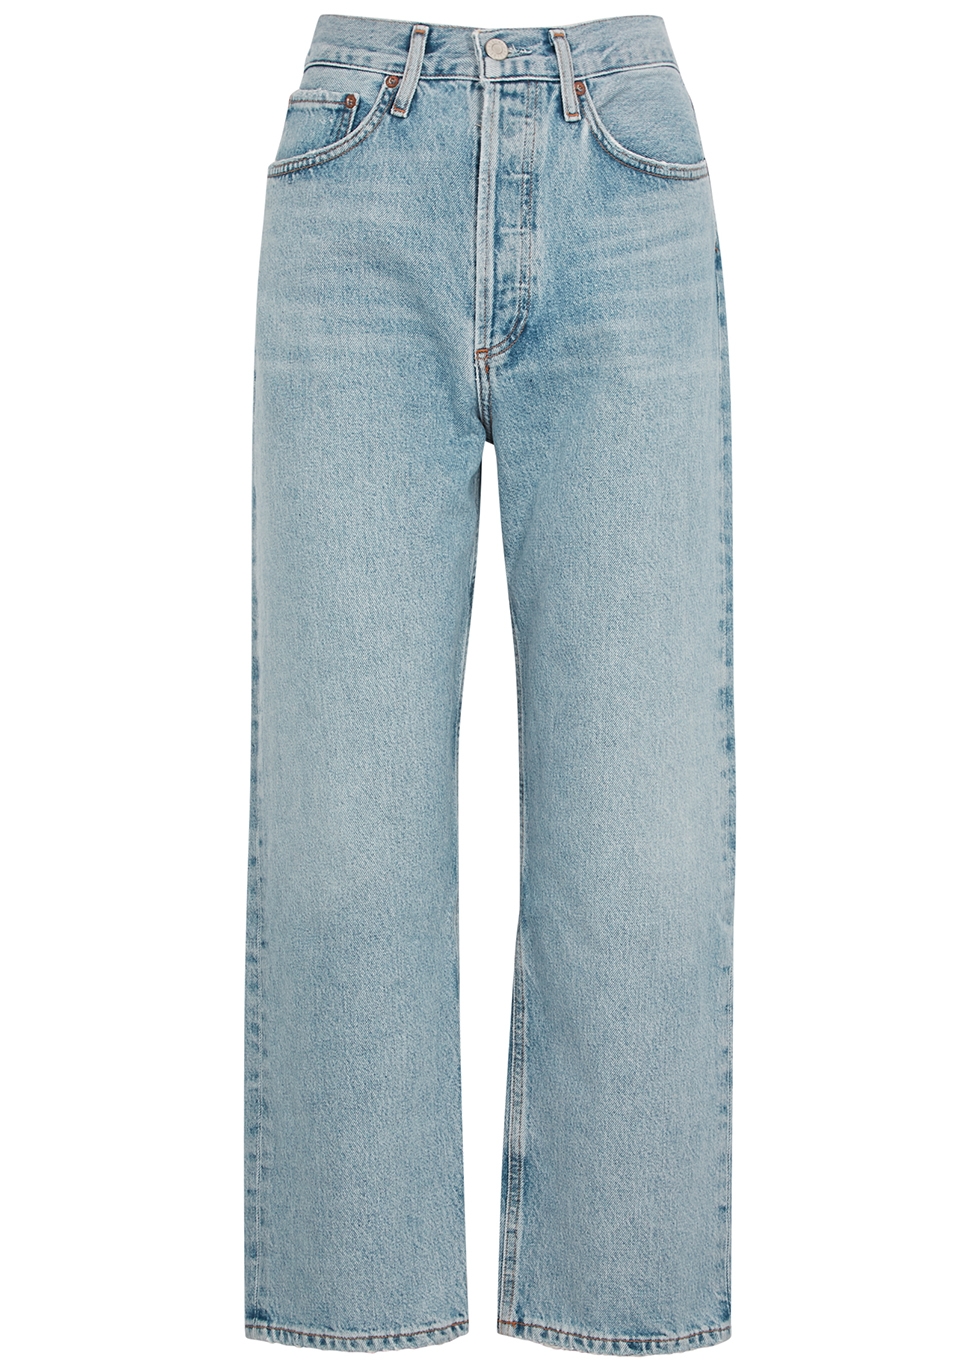 AGOLDE 90's light blue cropped wide-leg jeans